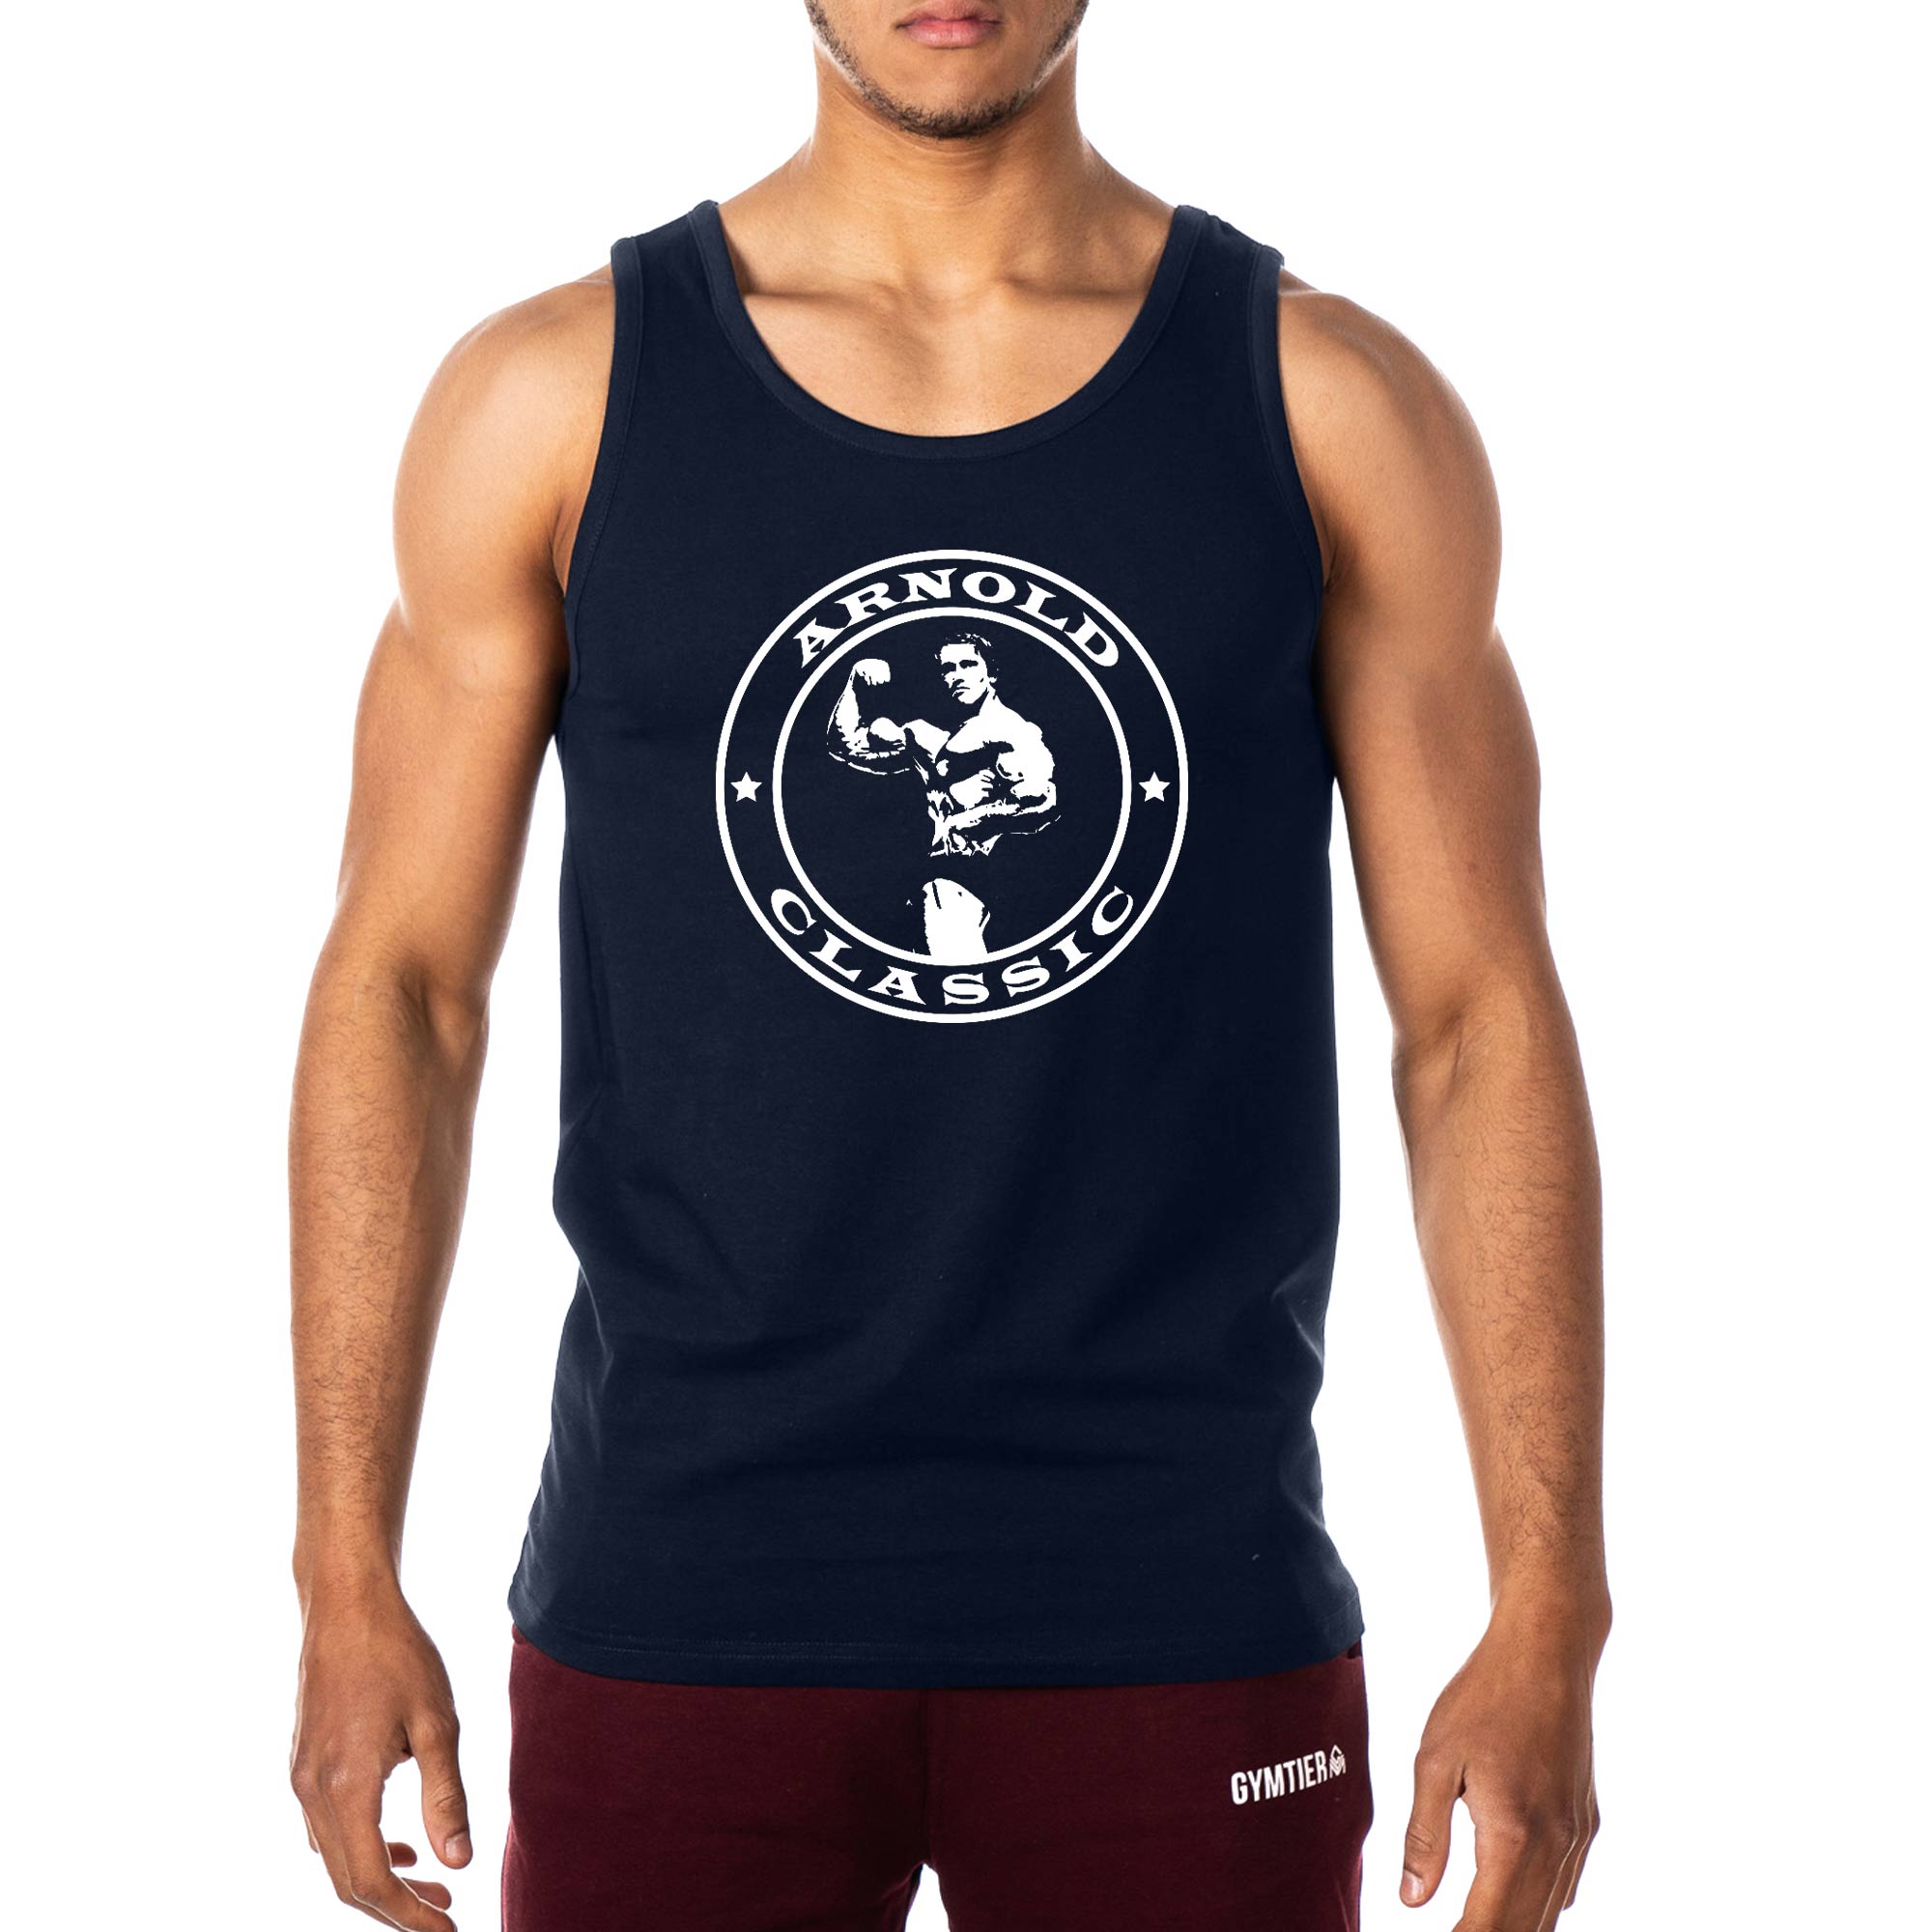 Arnold Classic Gym Vest